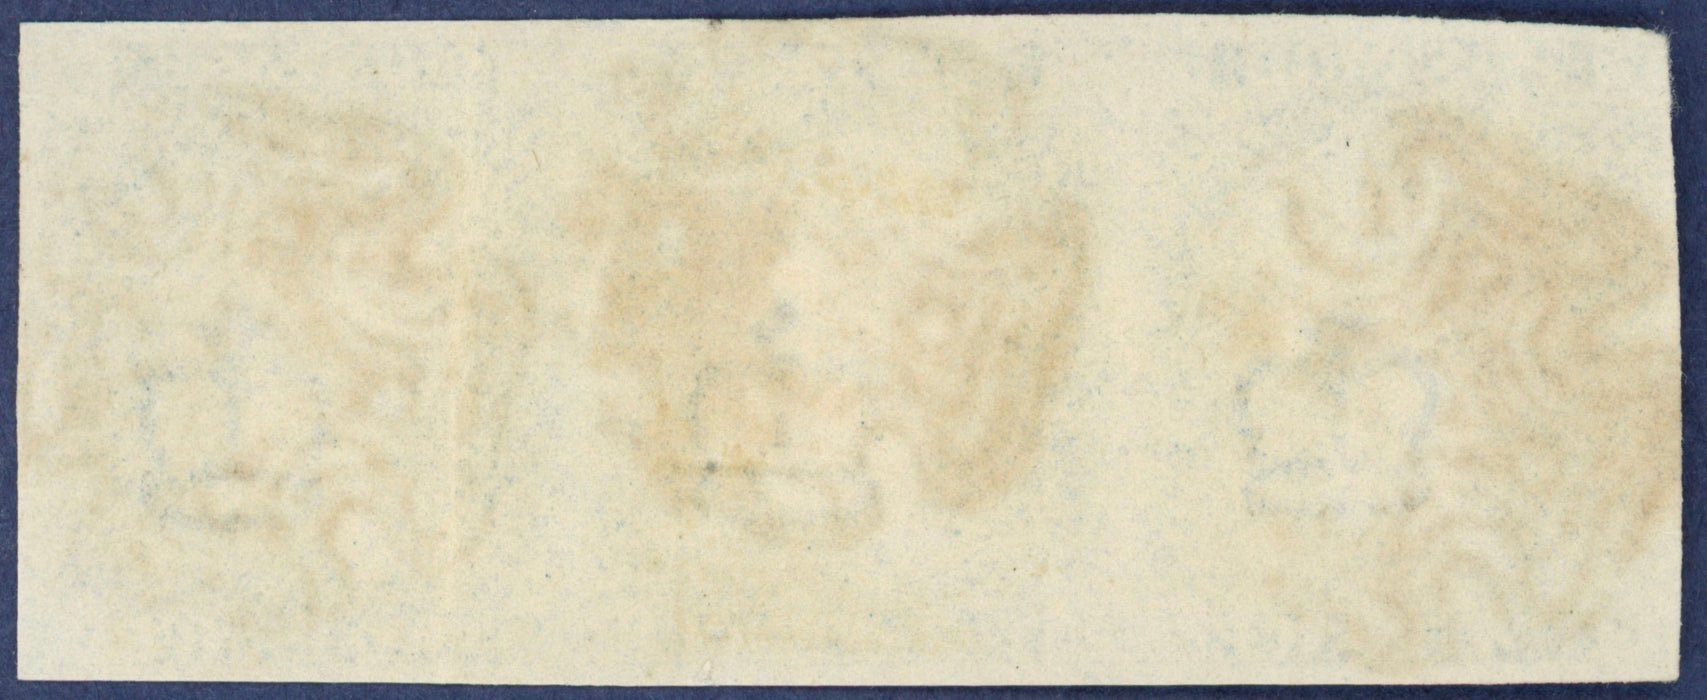 Great Britain 1840 2d blue Plate 1, SG5